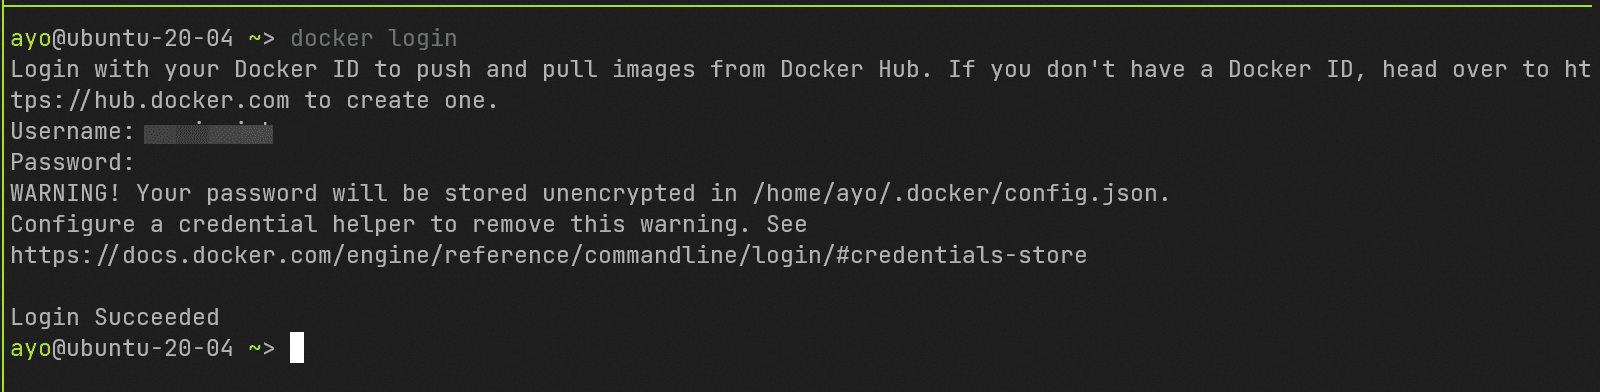 Screenshot of Docker login command